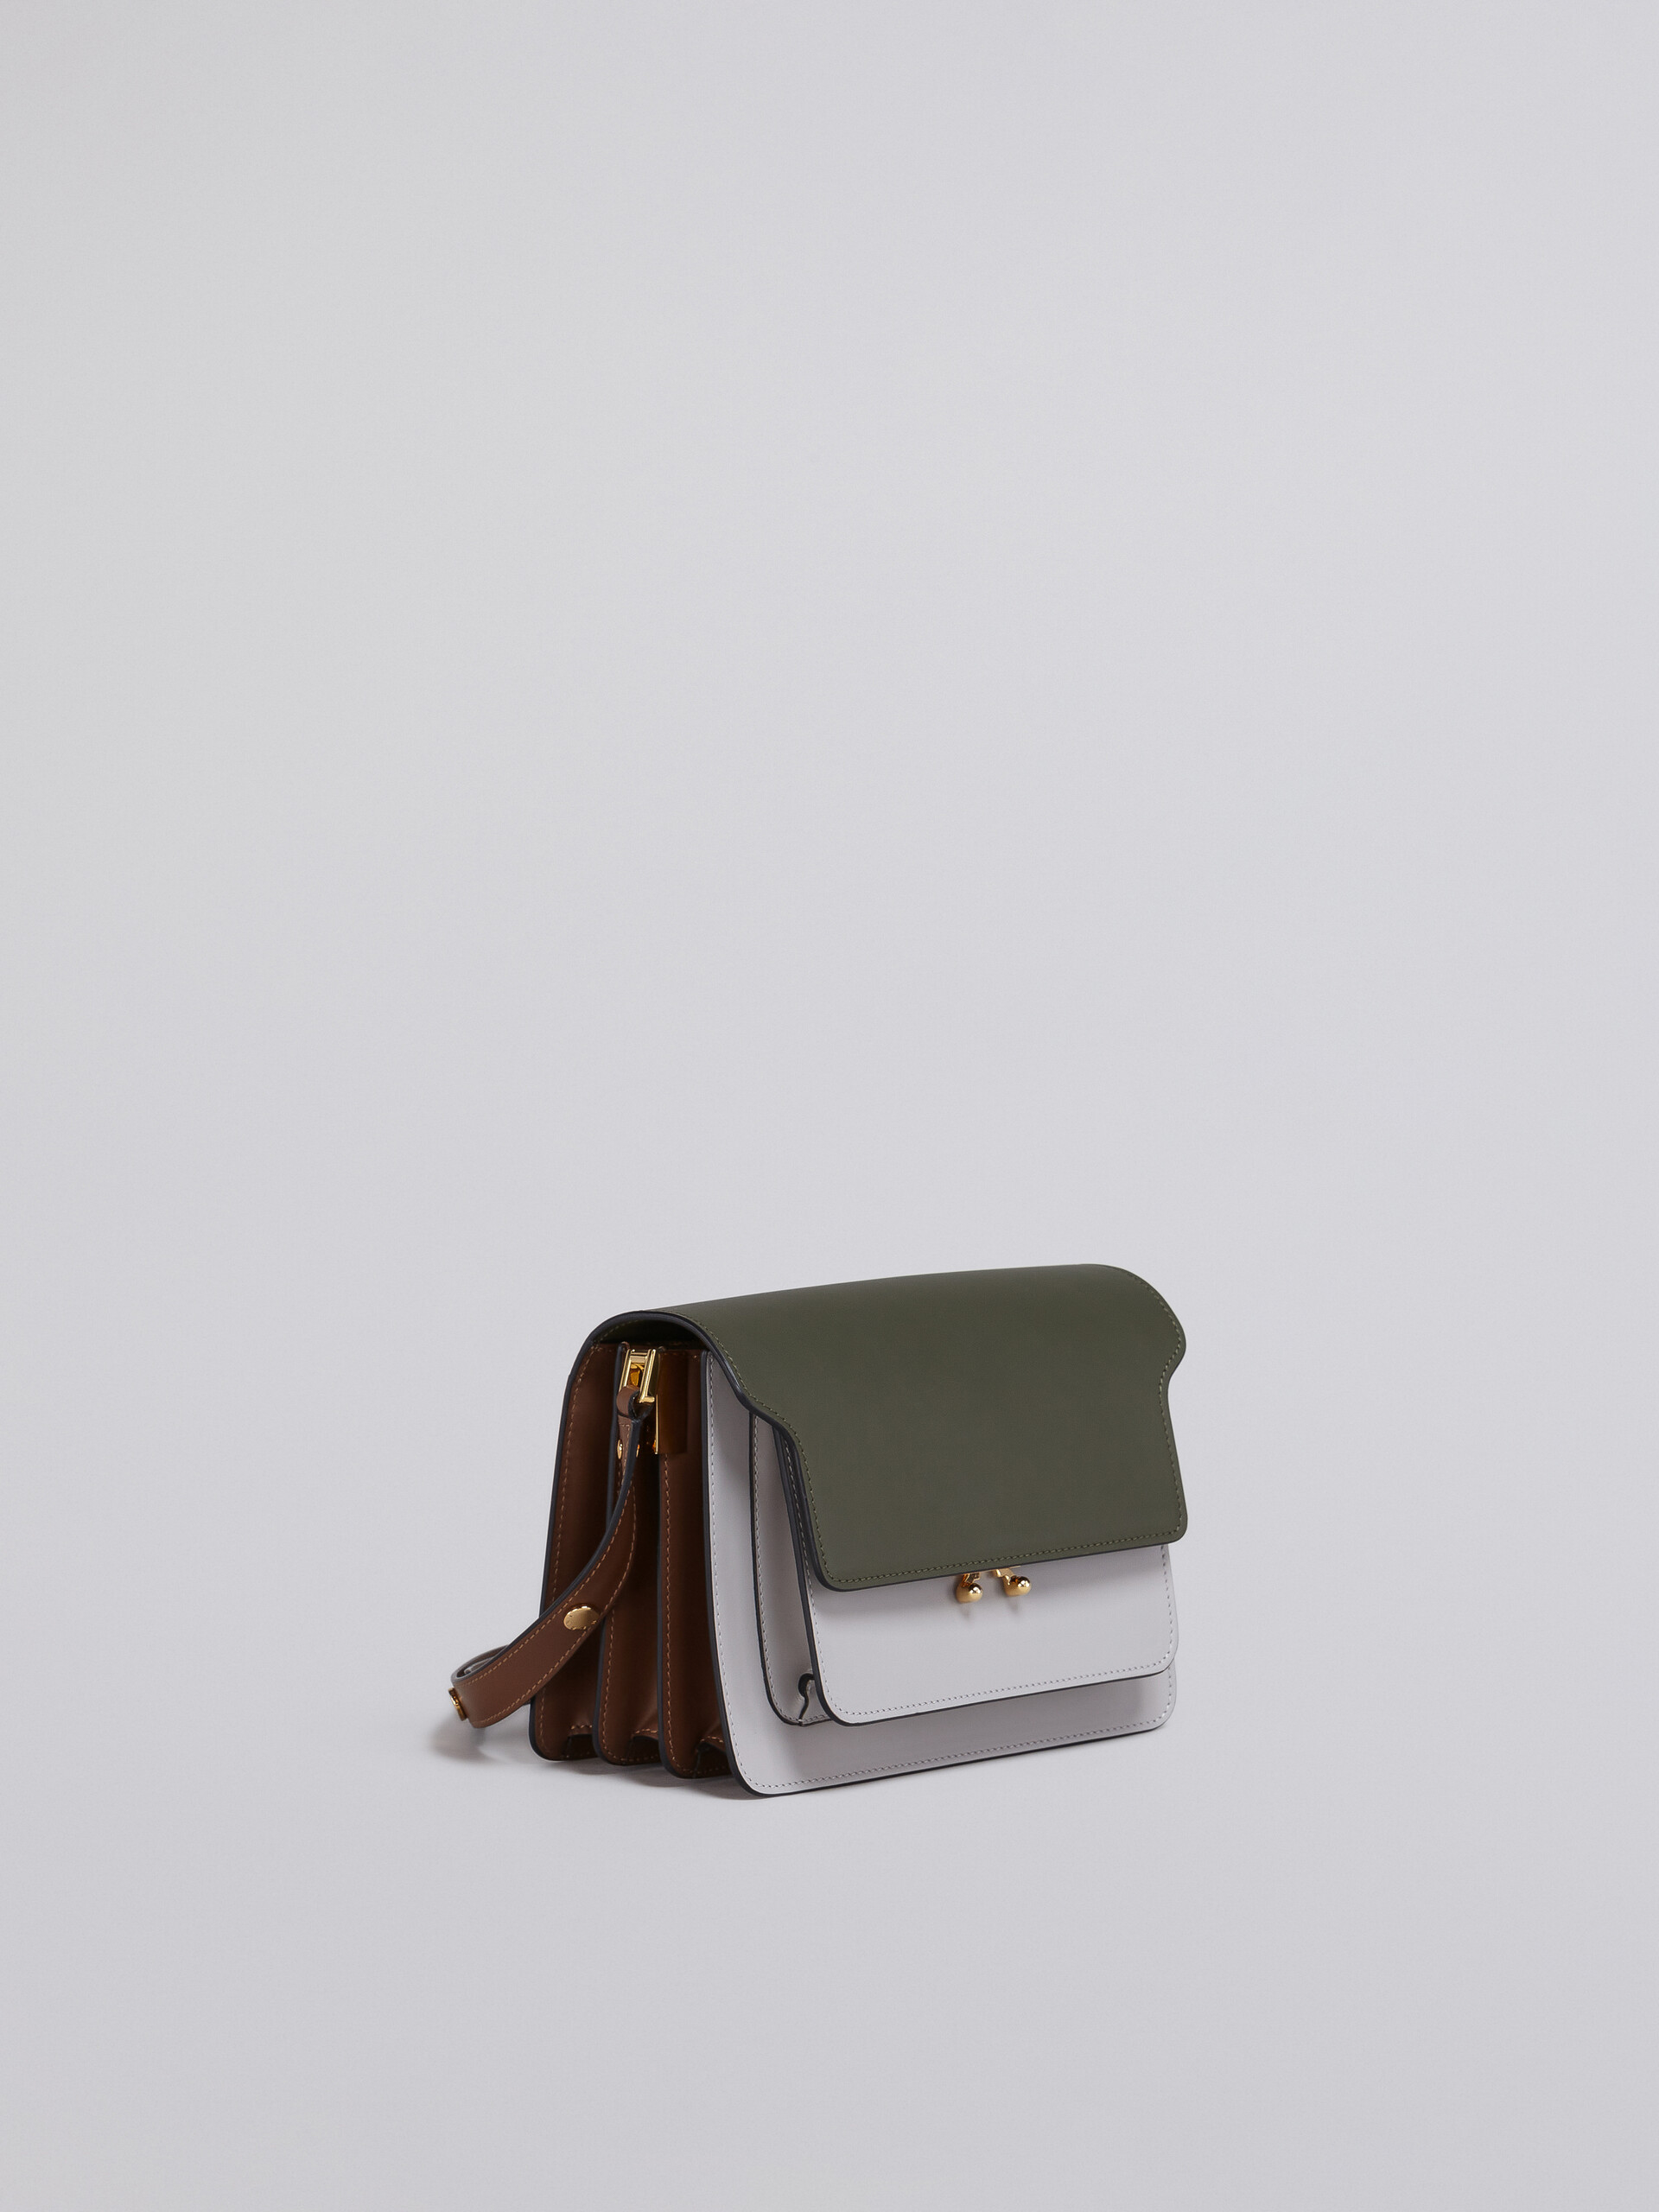 TRUNK medium bag in green grey and brown leather - Shoulder Bag - Image 5